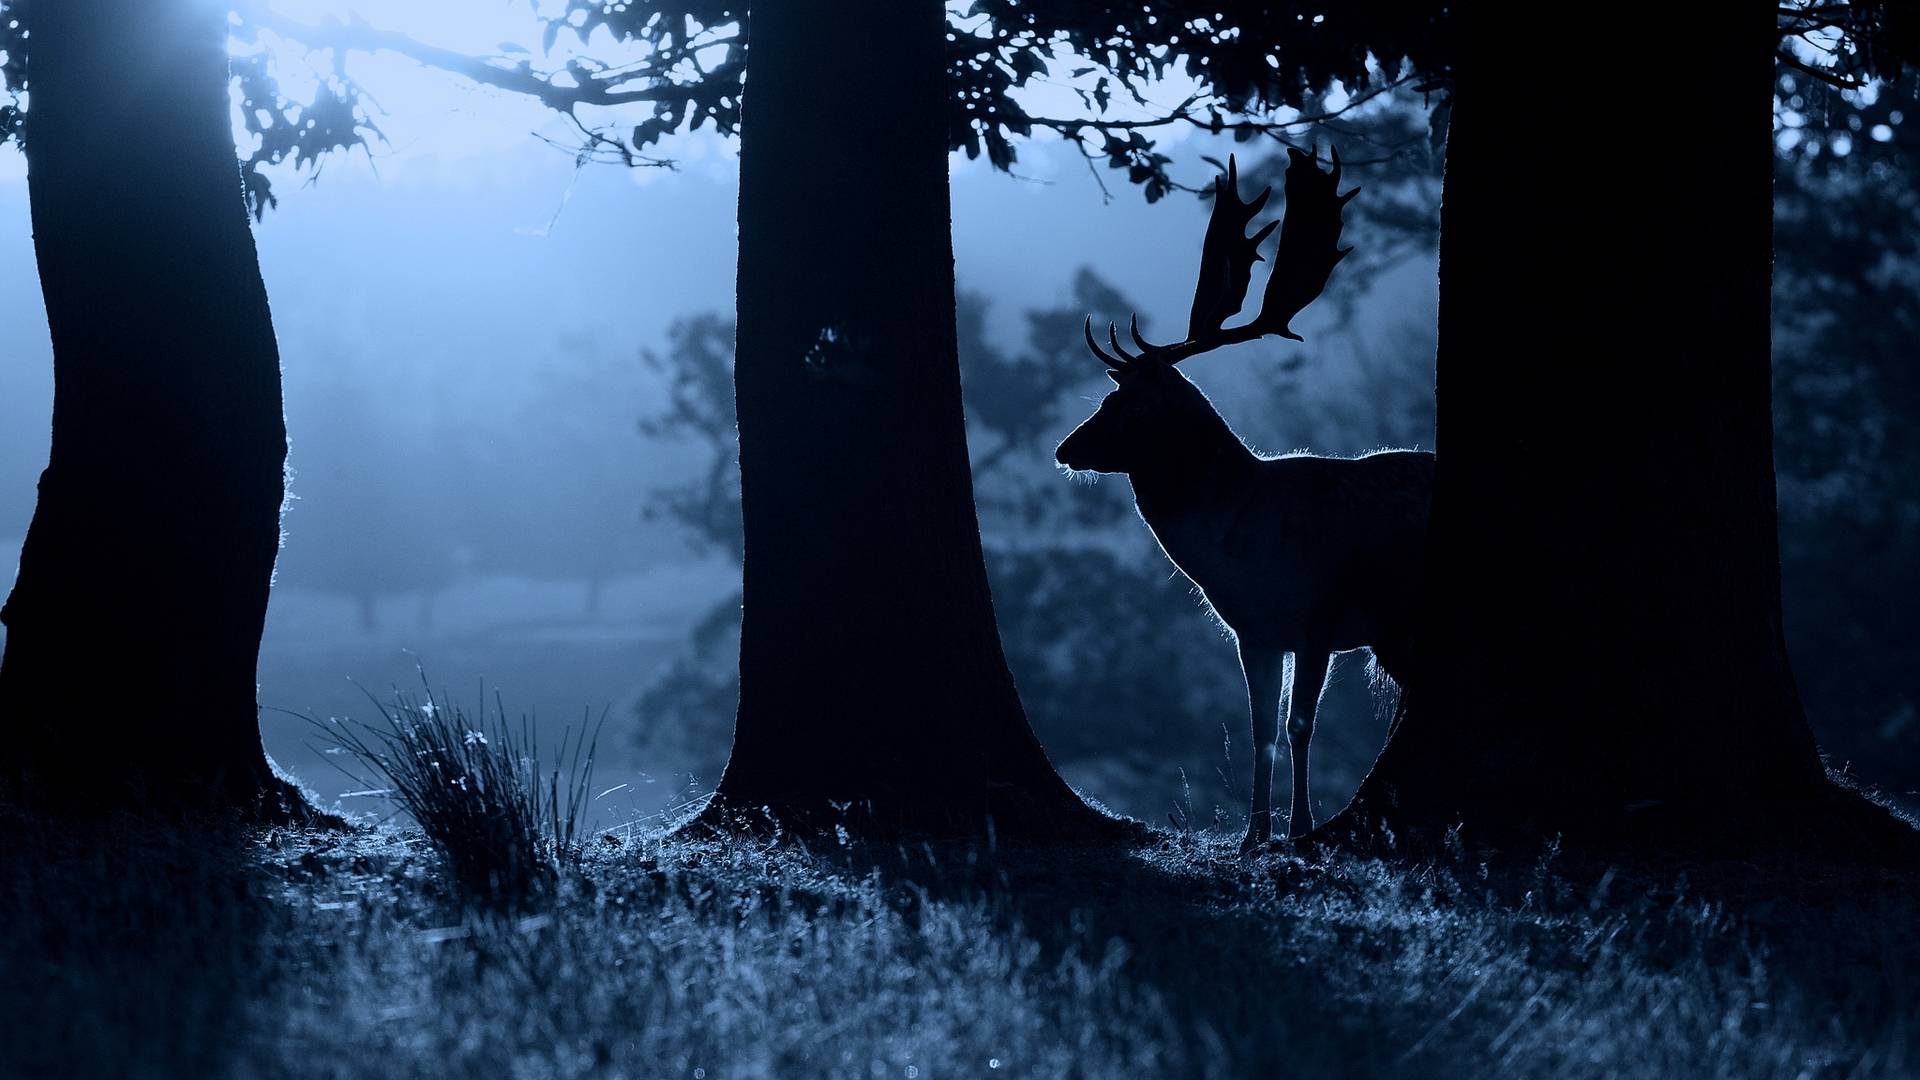 Wallpapers night forest deer on the desktop